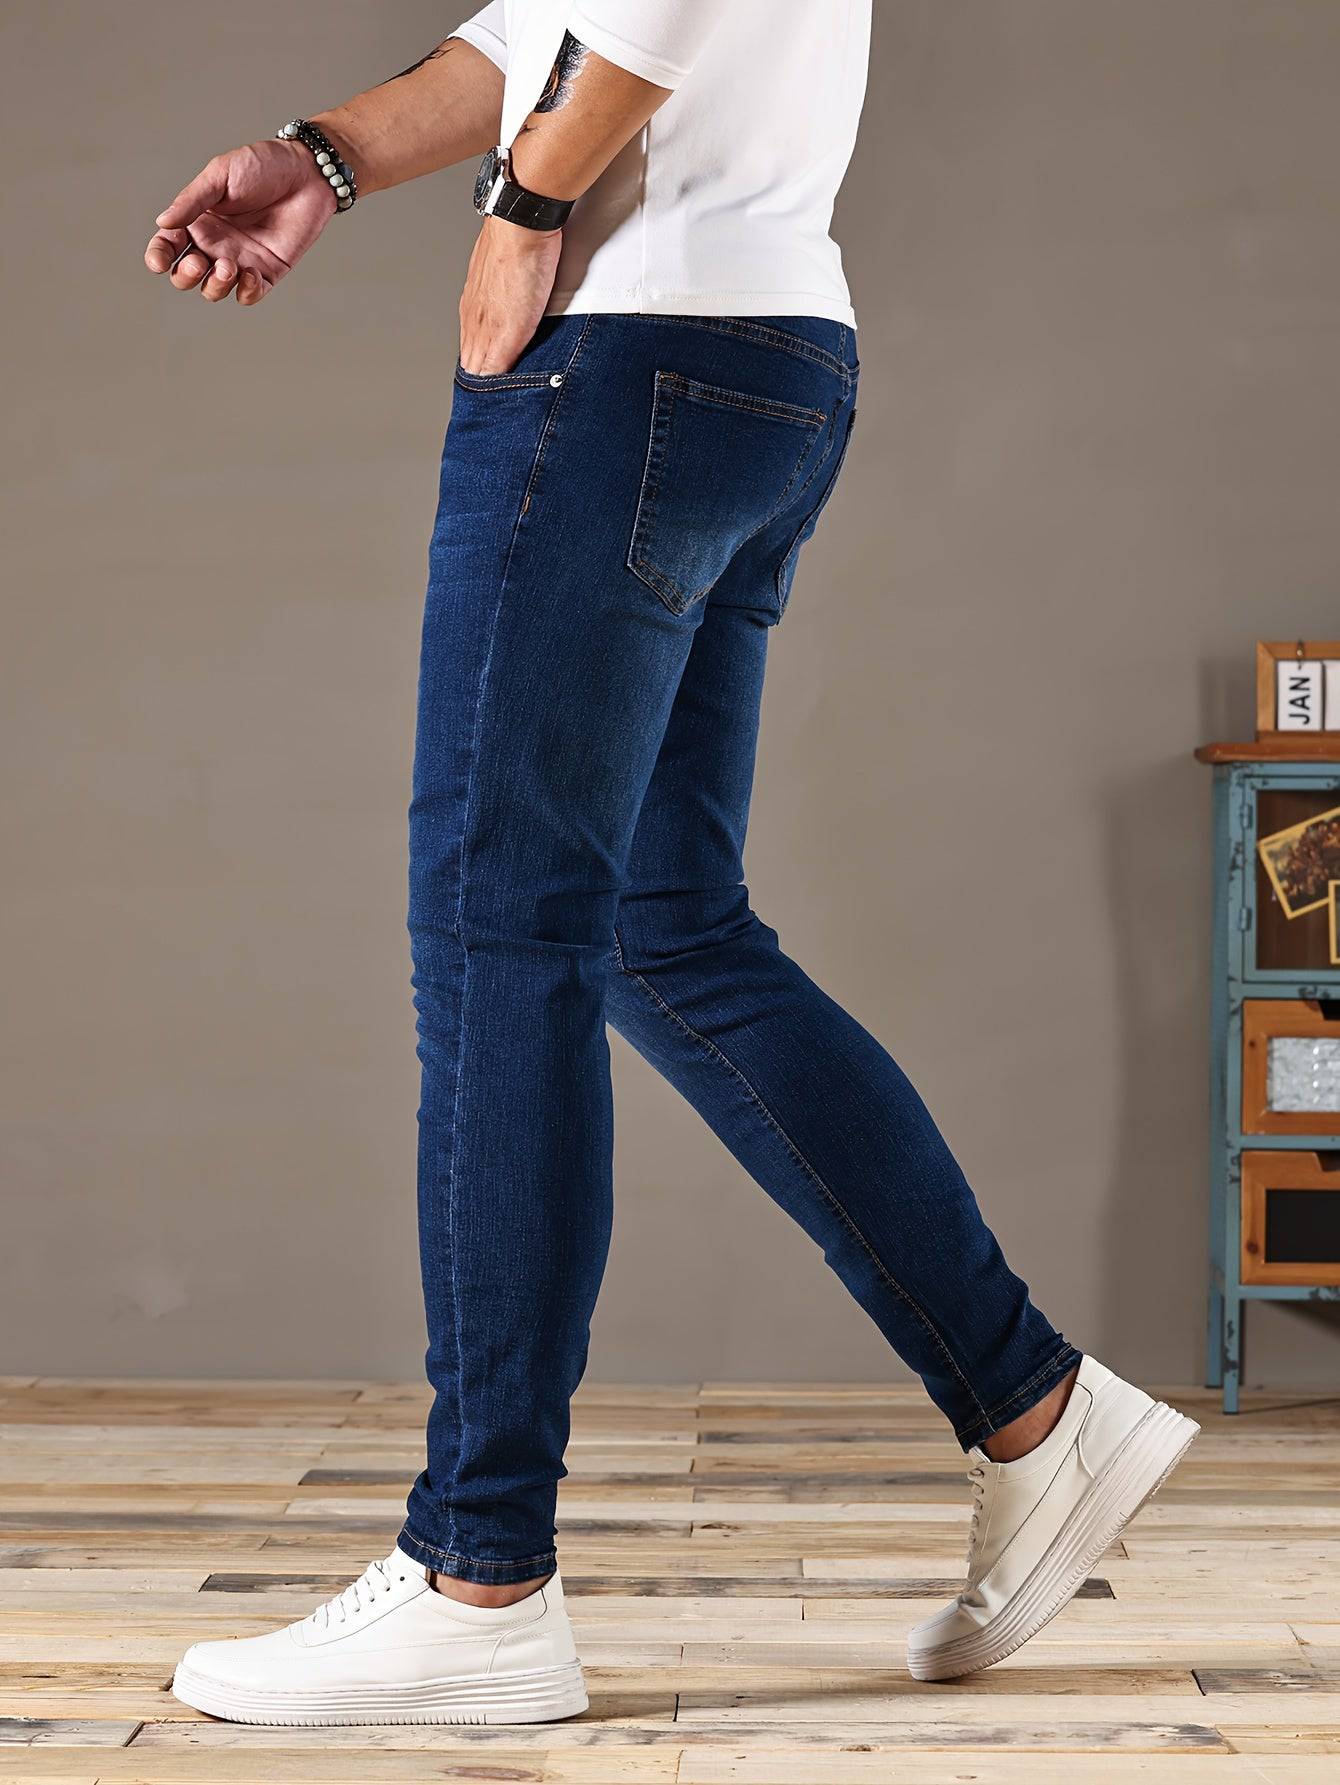 Herren Skinny Jeans - Klassisch, Street Style, Stretch